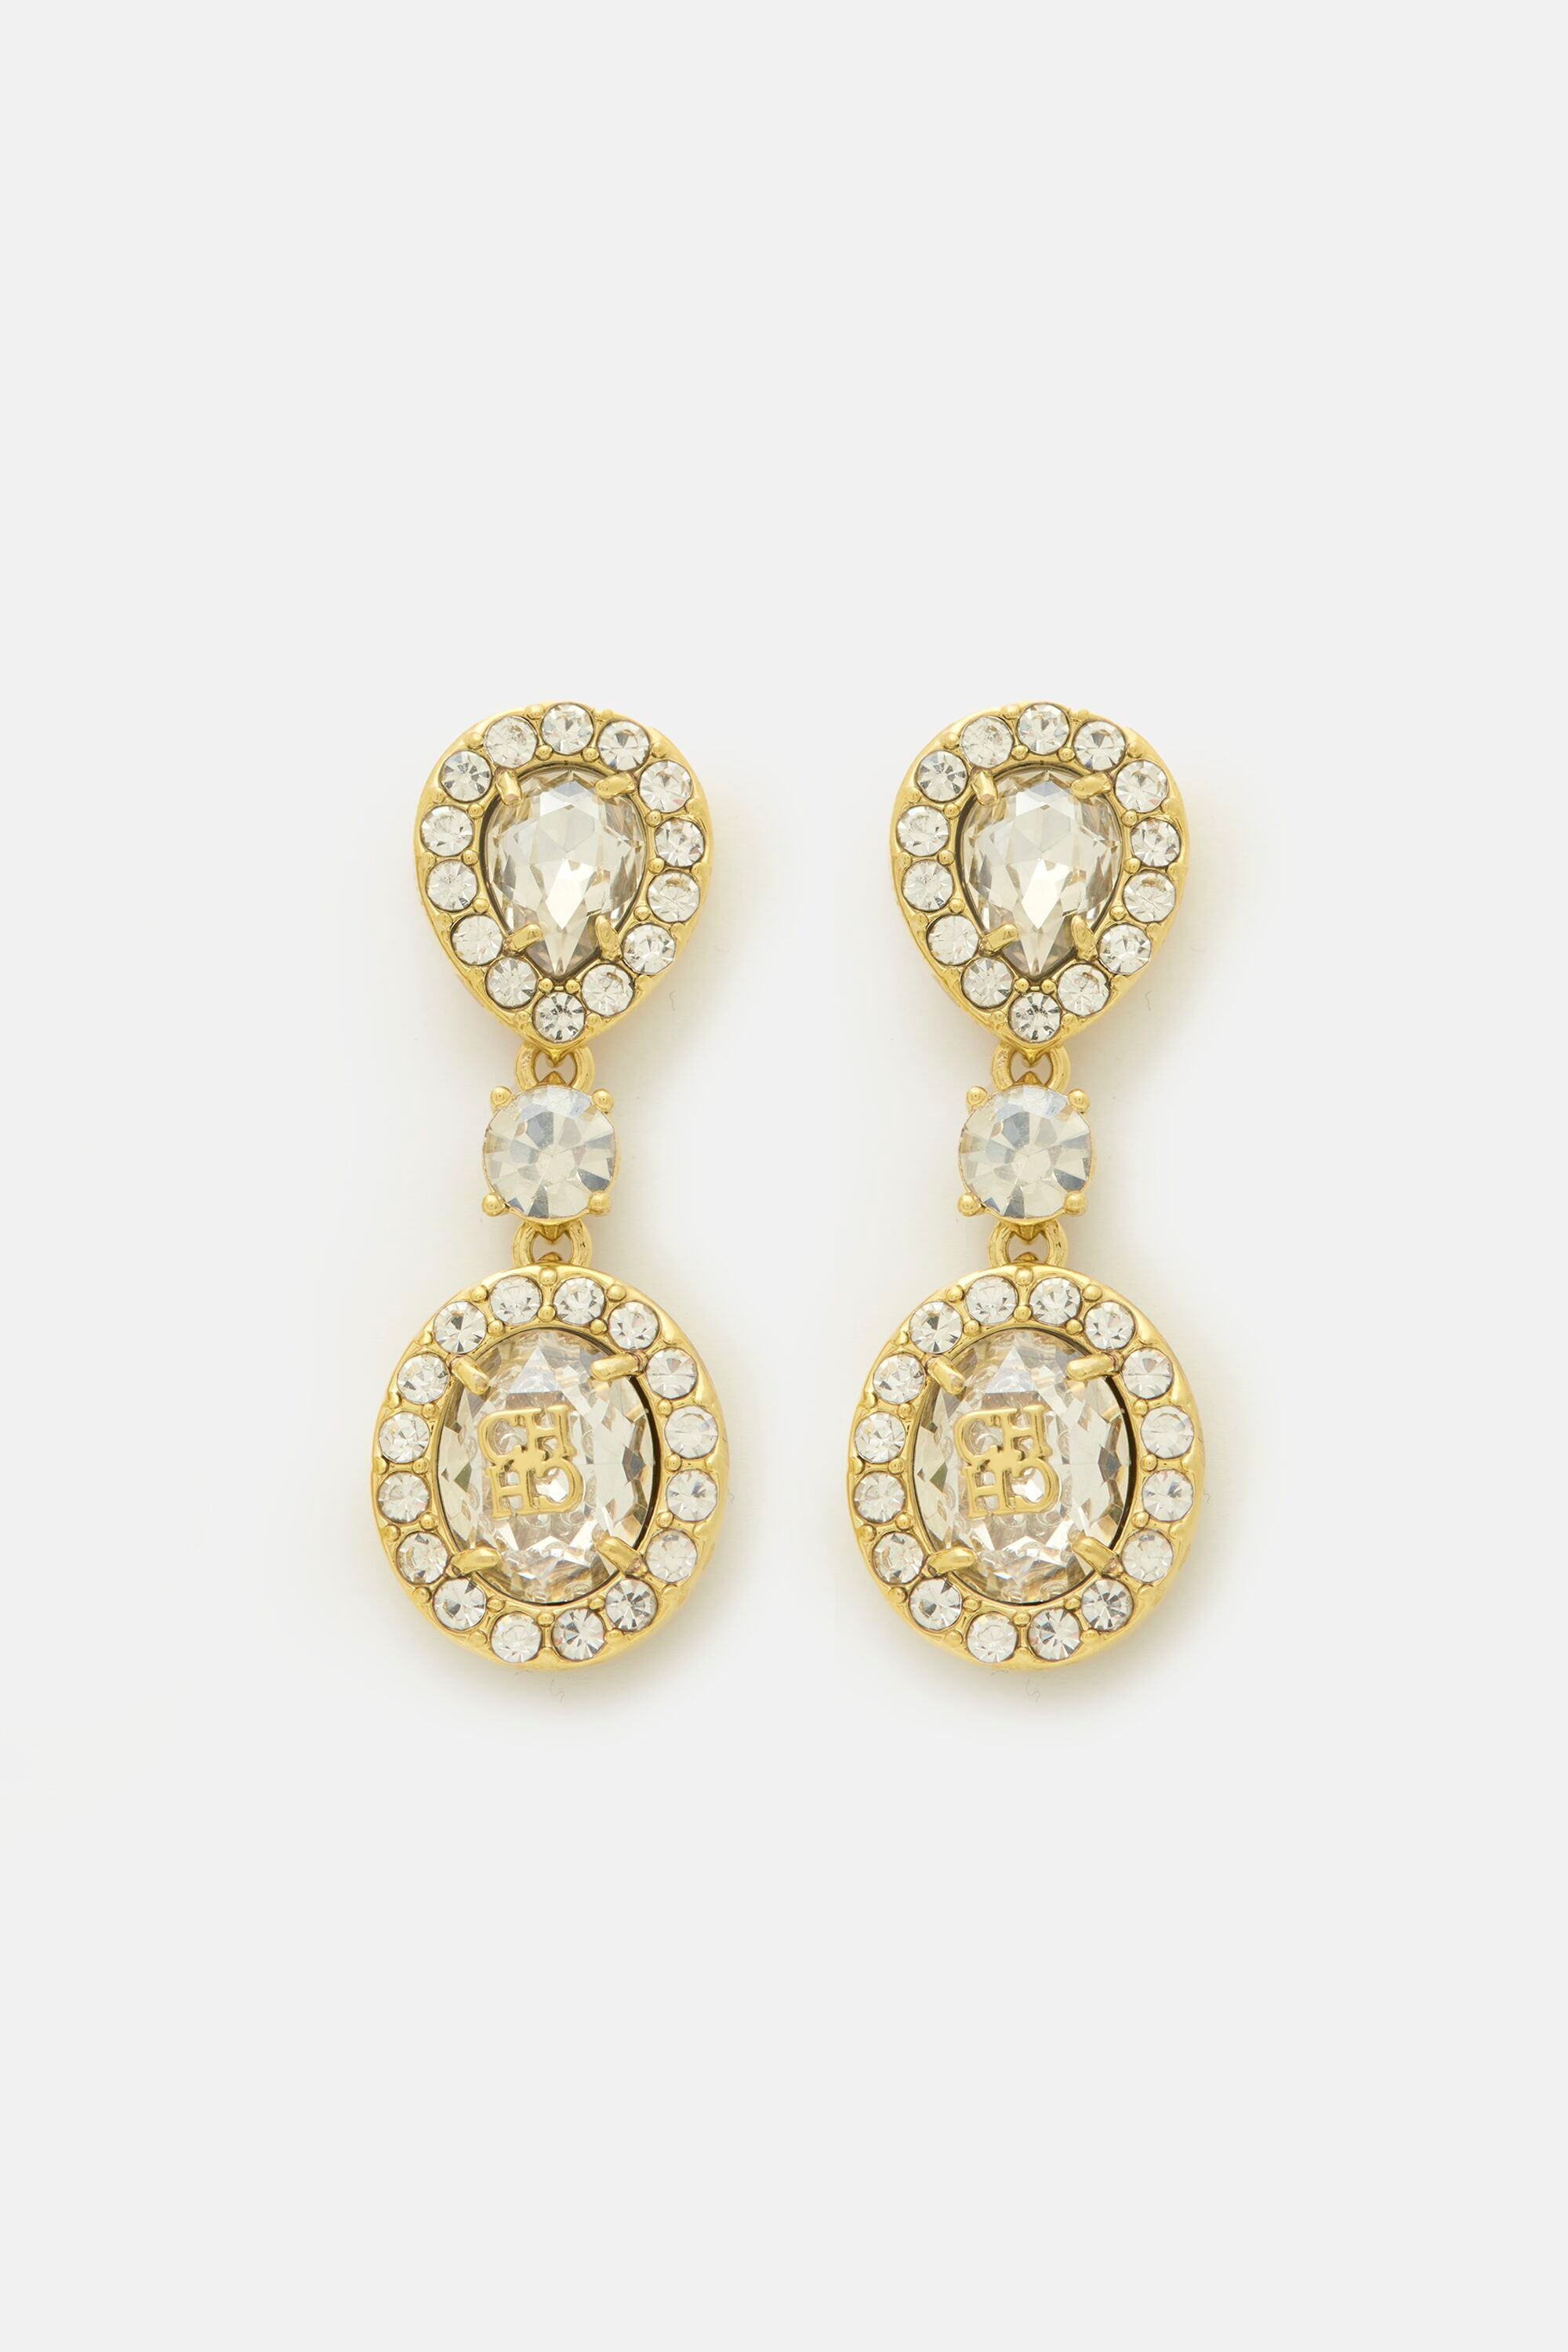 CH Crystal earrings